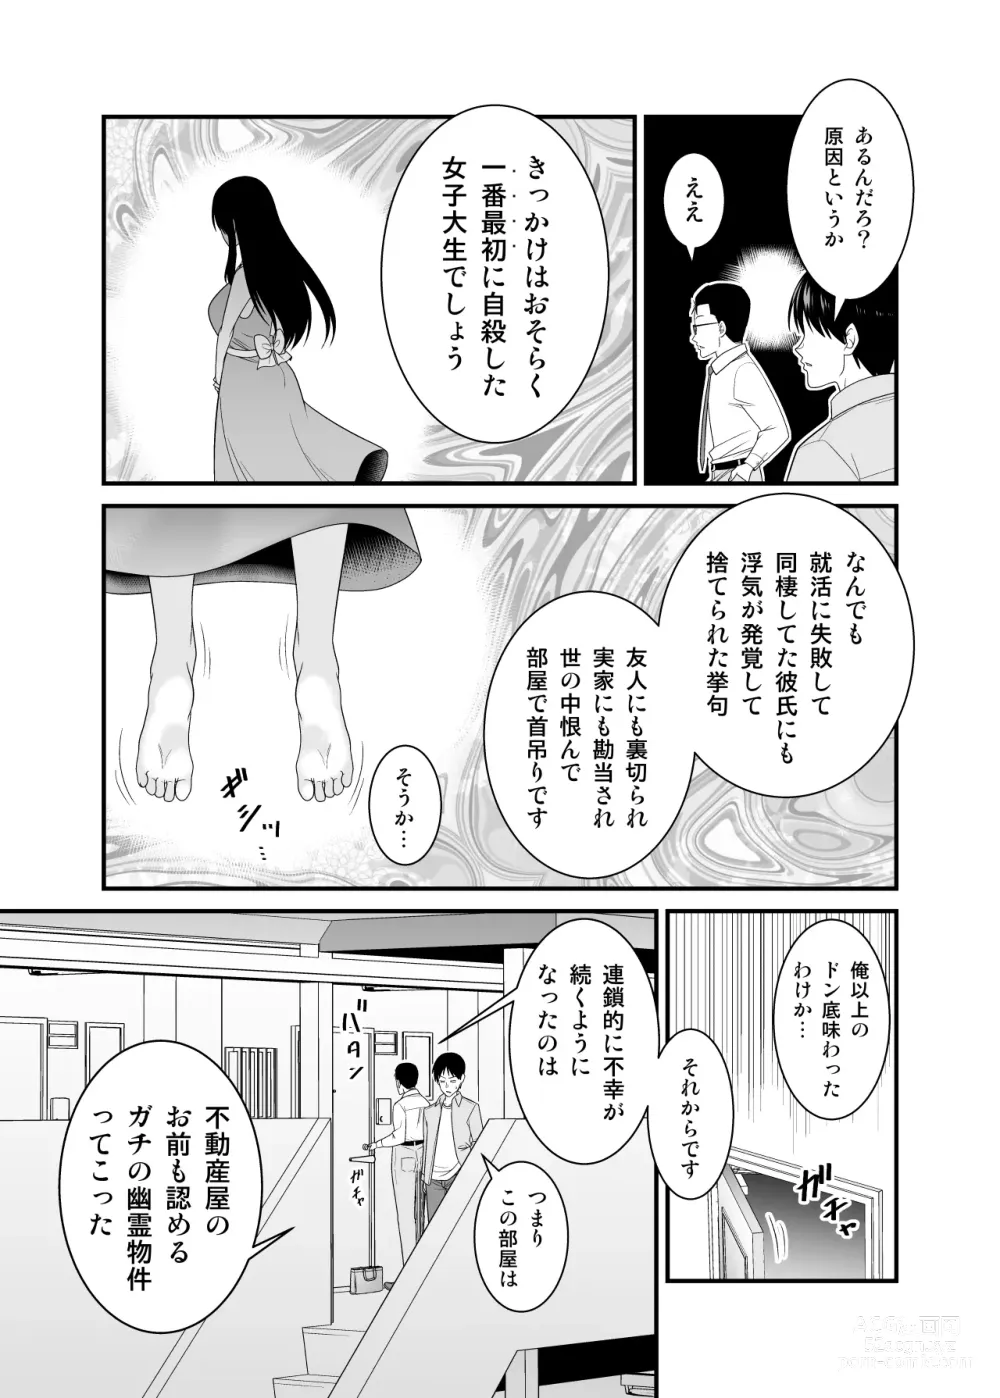 Page 4 of doujinshi ヤバい事故物件に女幽霊が出たけど無職底辺の俺はセックスしまくる